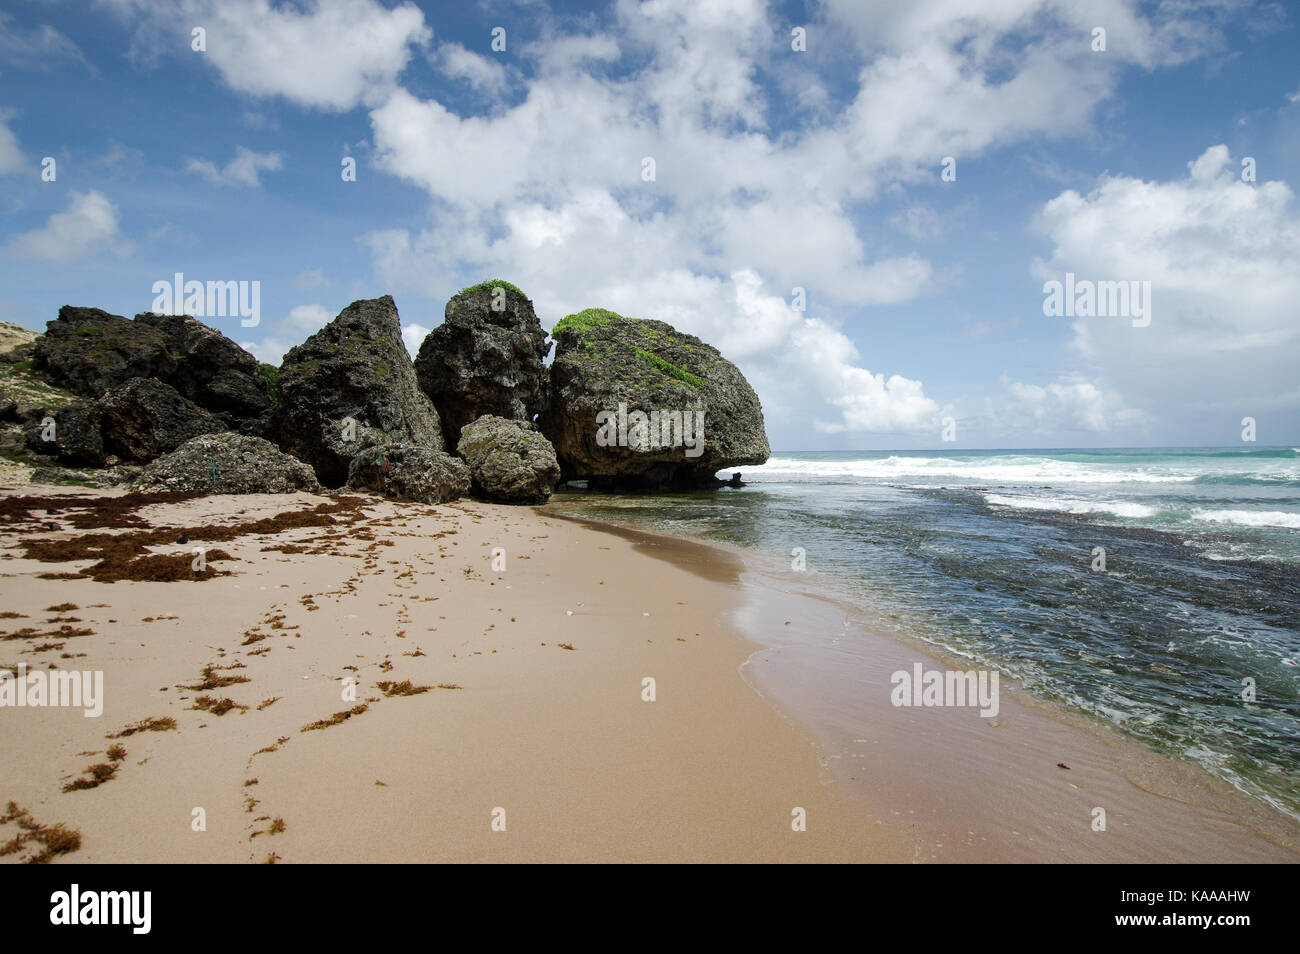 Giant rocks and rock formations near Bathsheba, east coast of Barbados Stock Photo